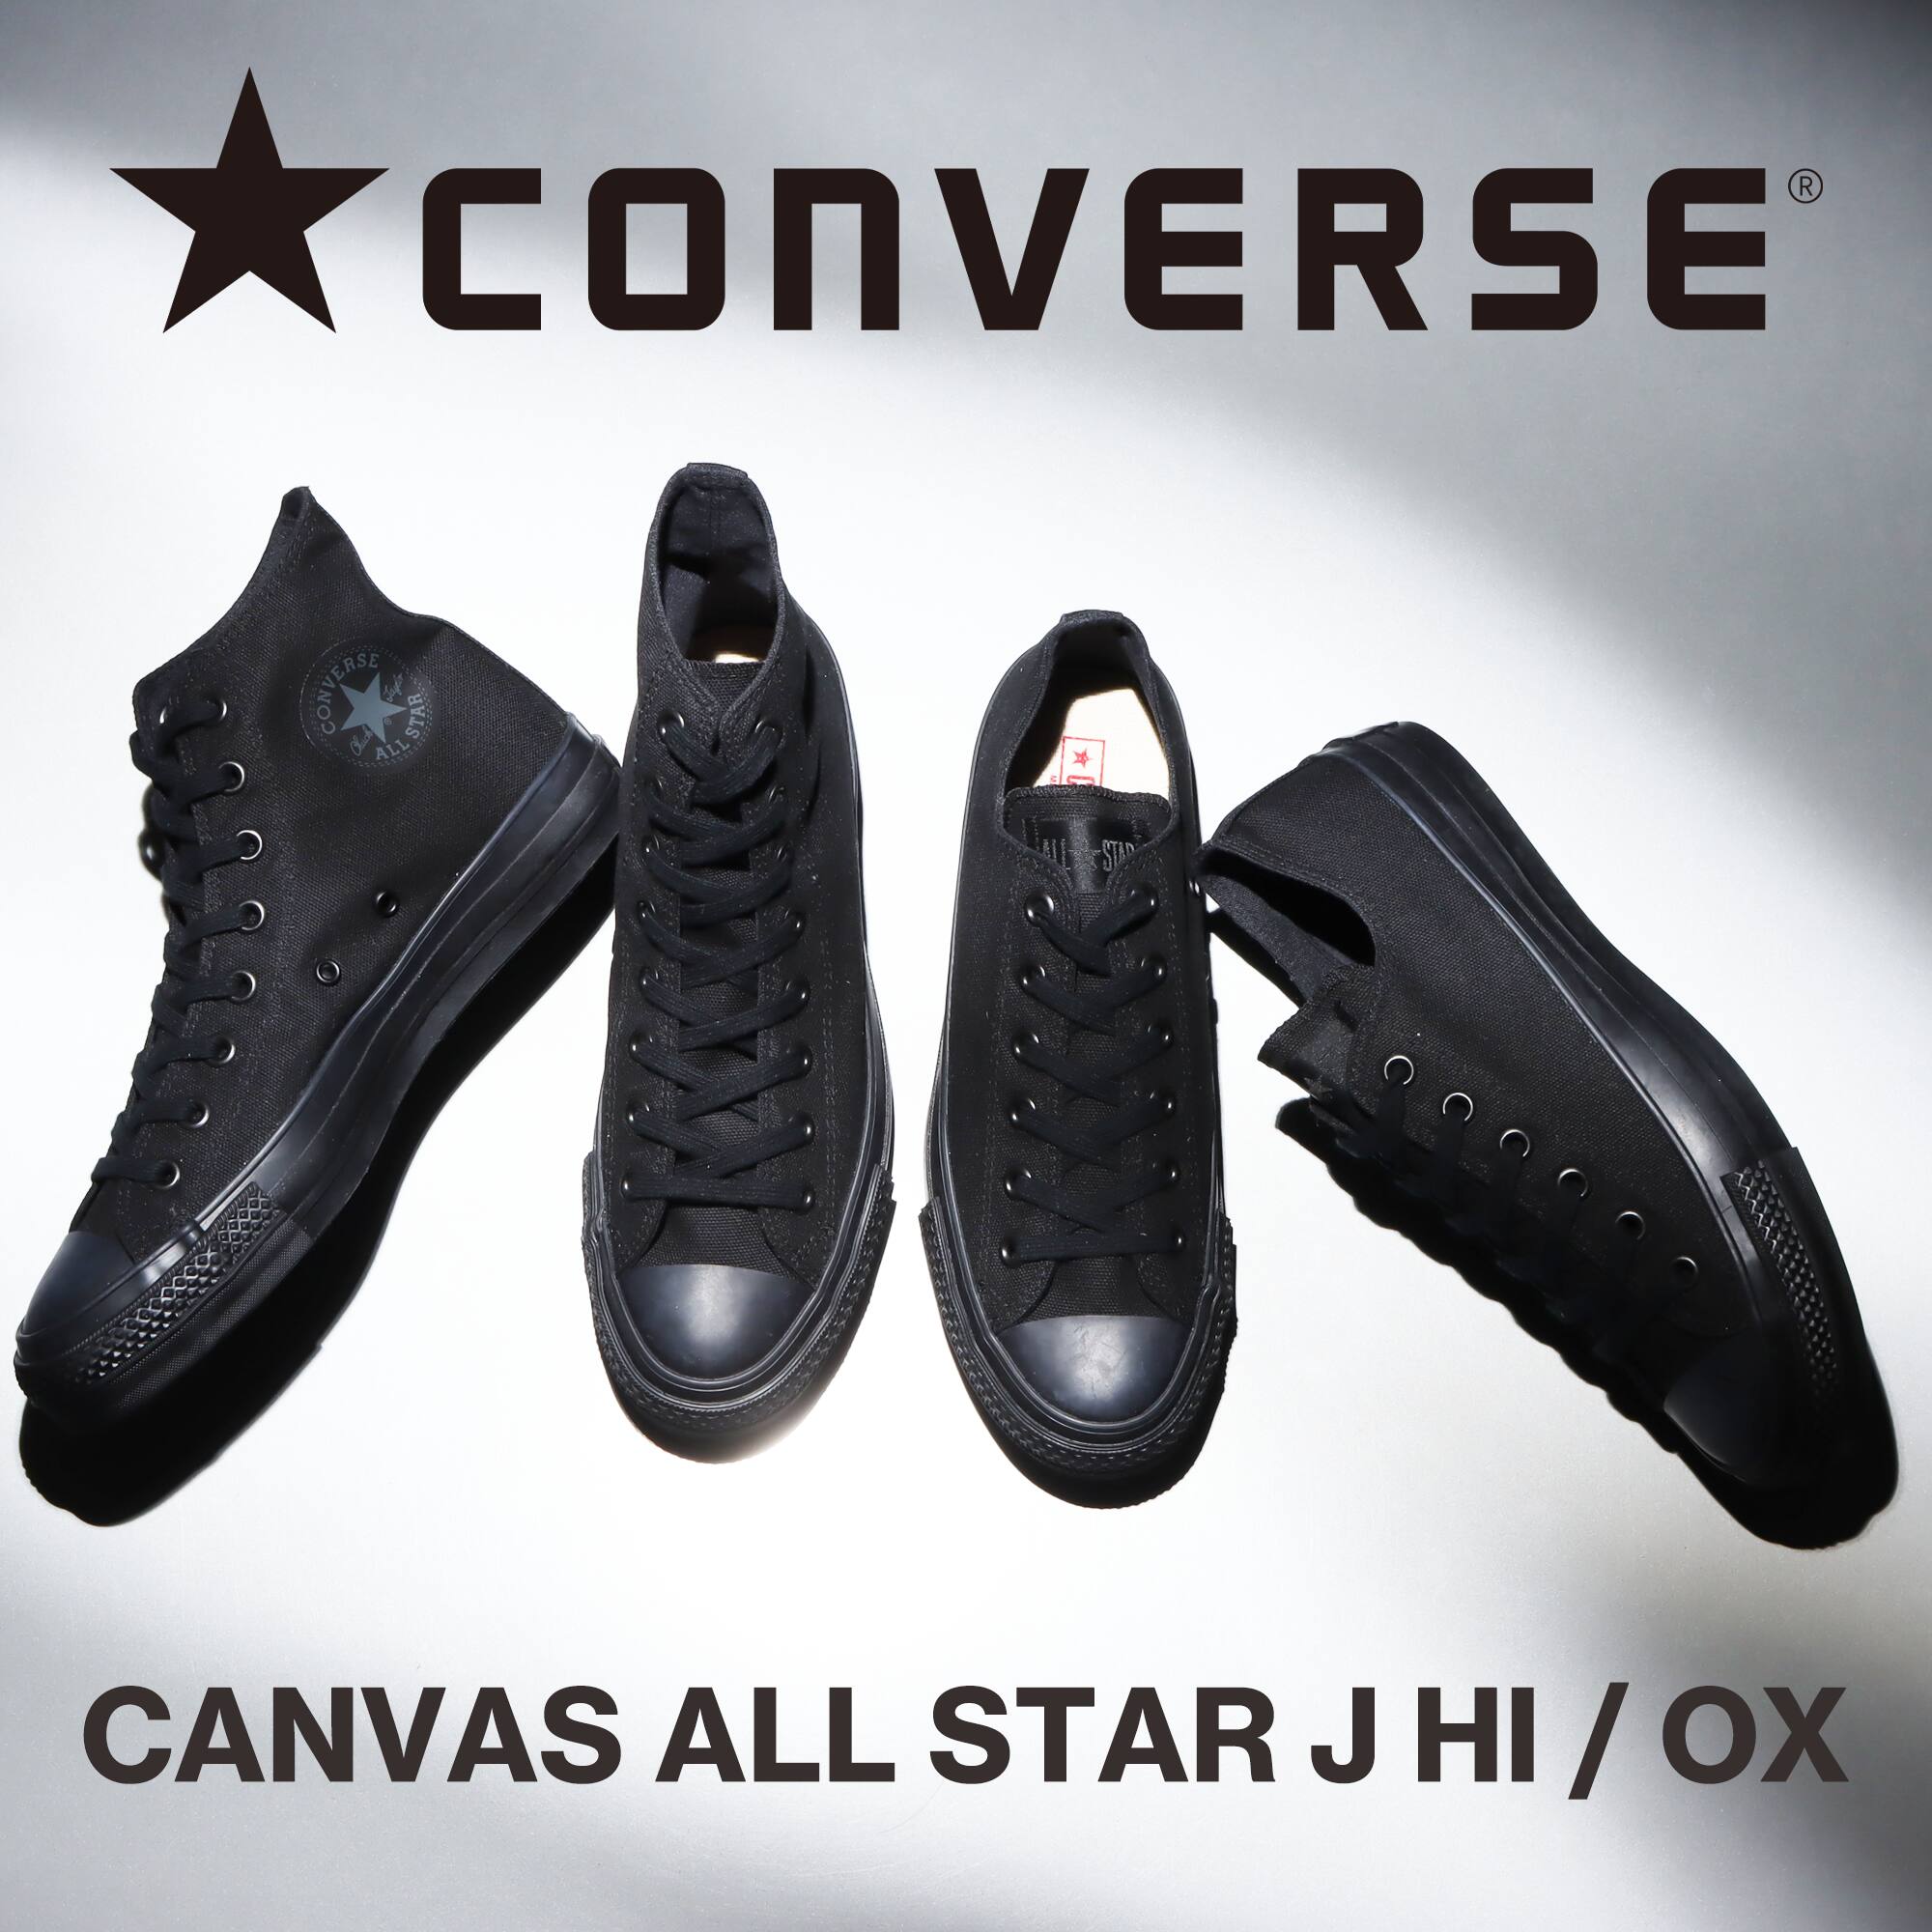 CONVERSE CANVAS ALL STAR J HI / OX